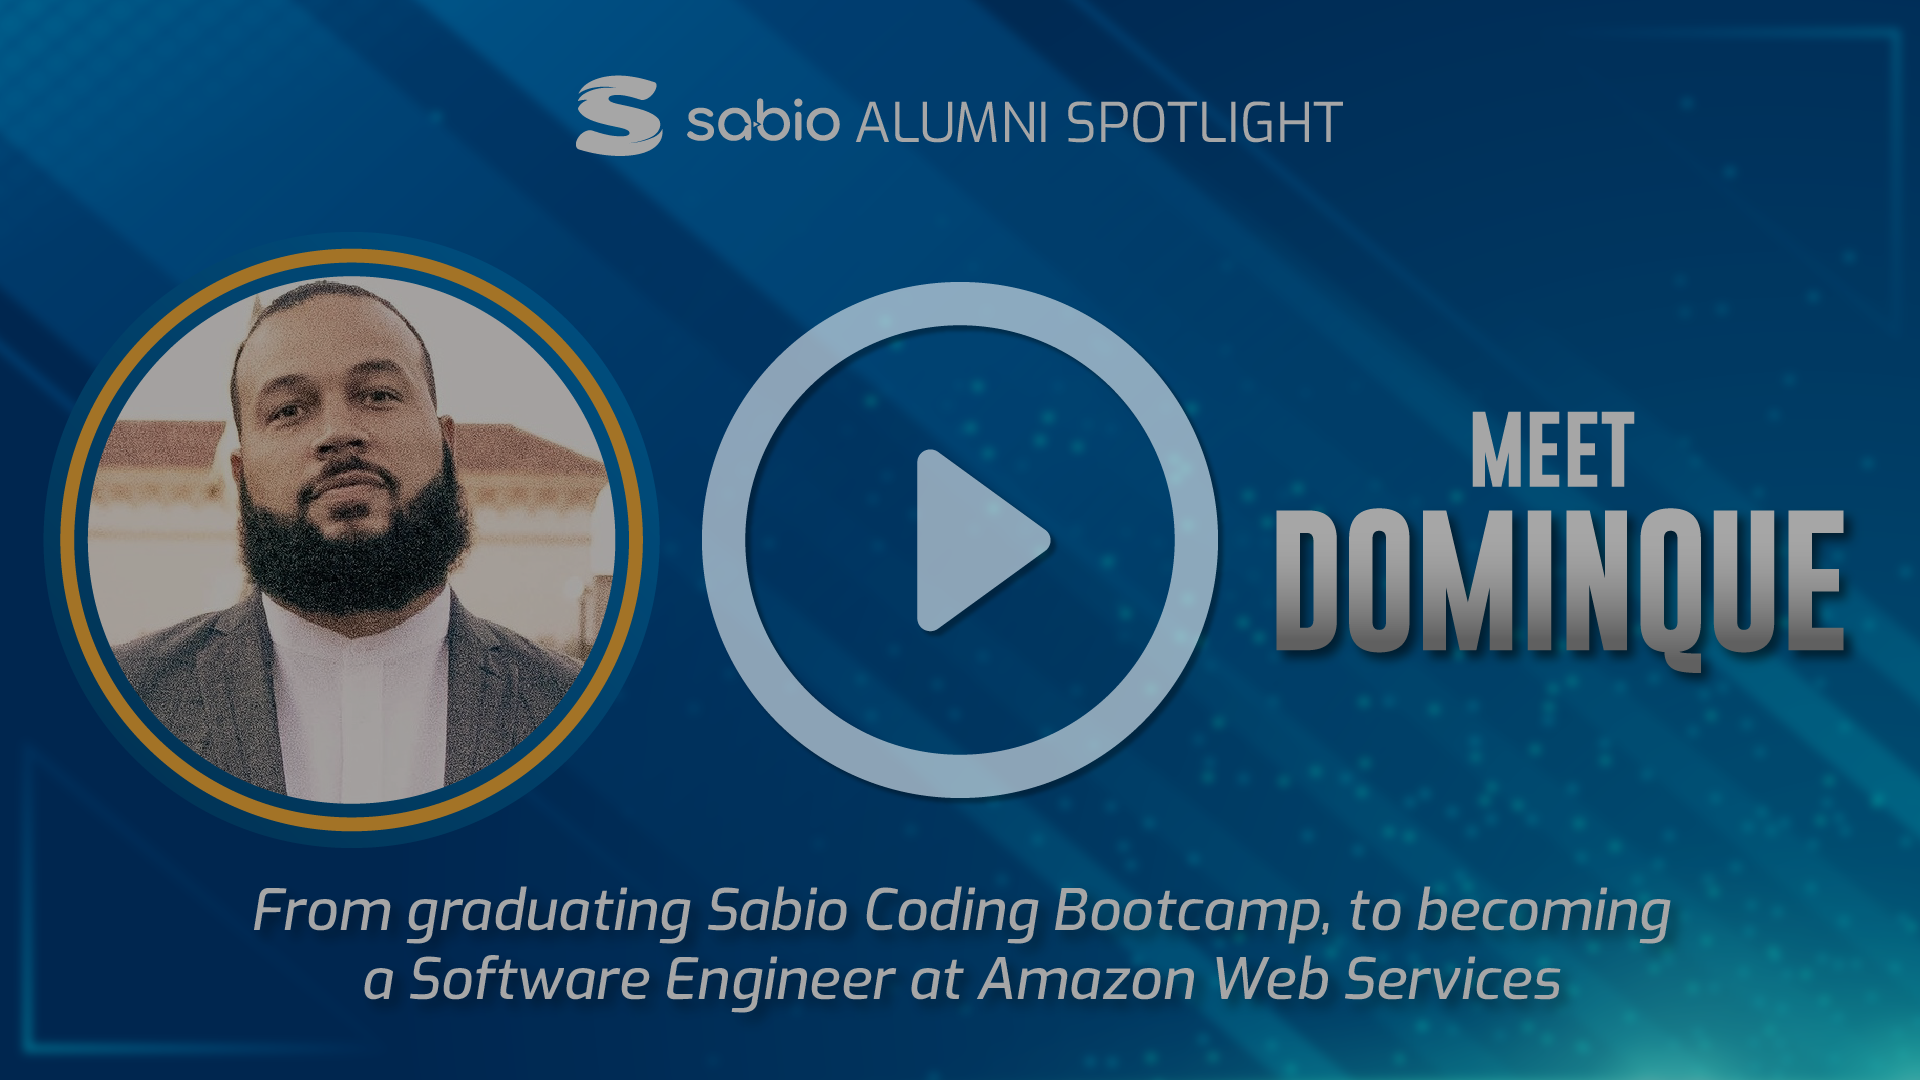 Sabio Alumni Spotlight: Dominique. Play symbol overlaid to the image.